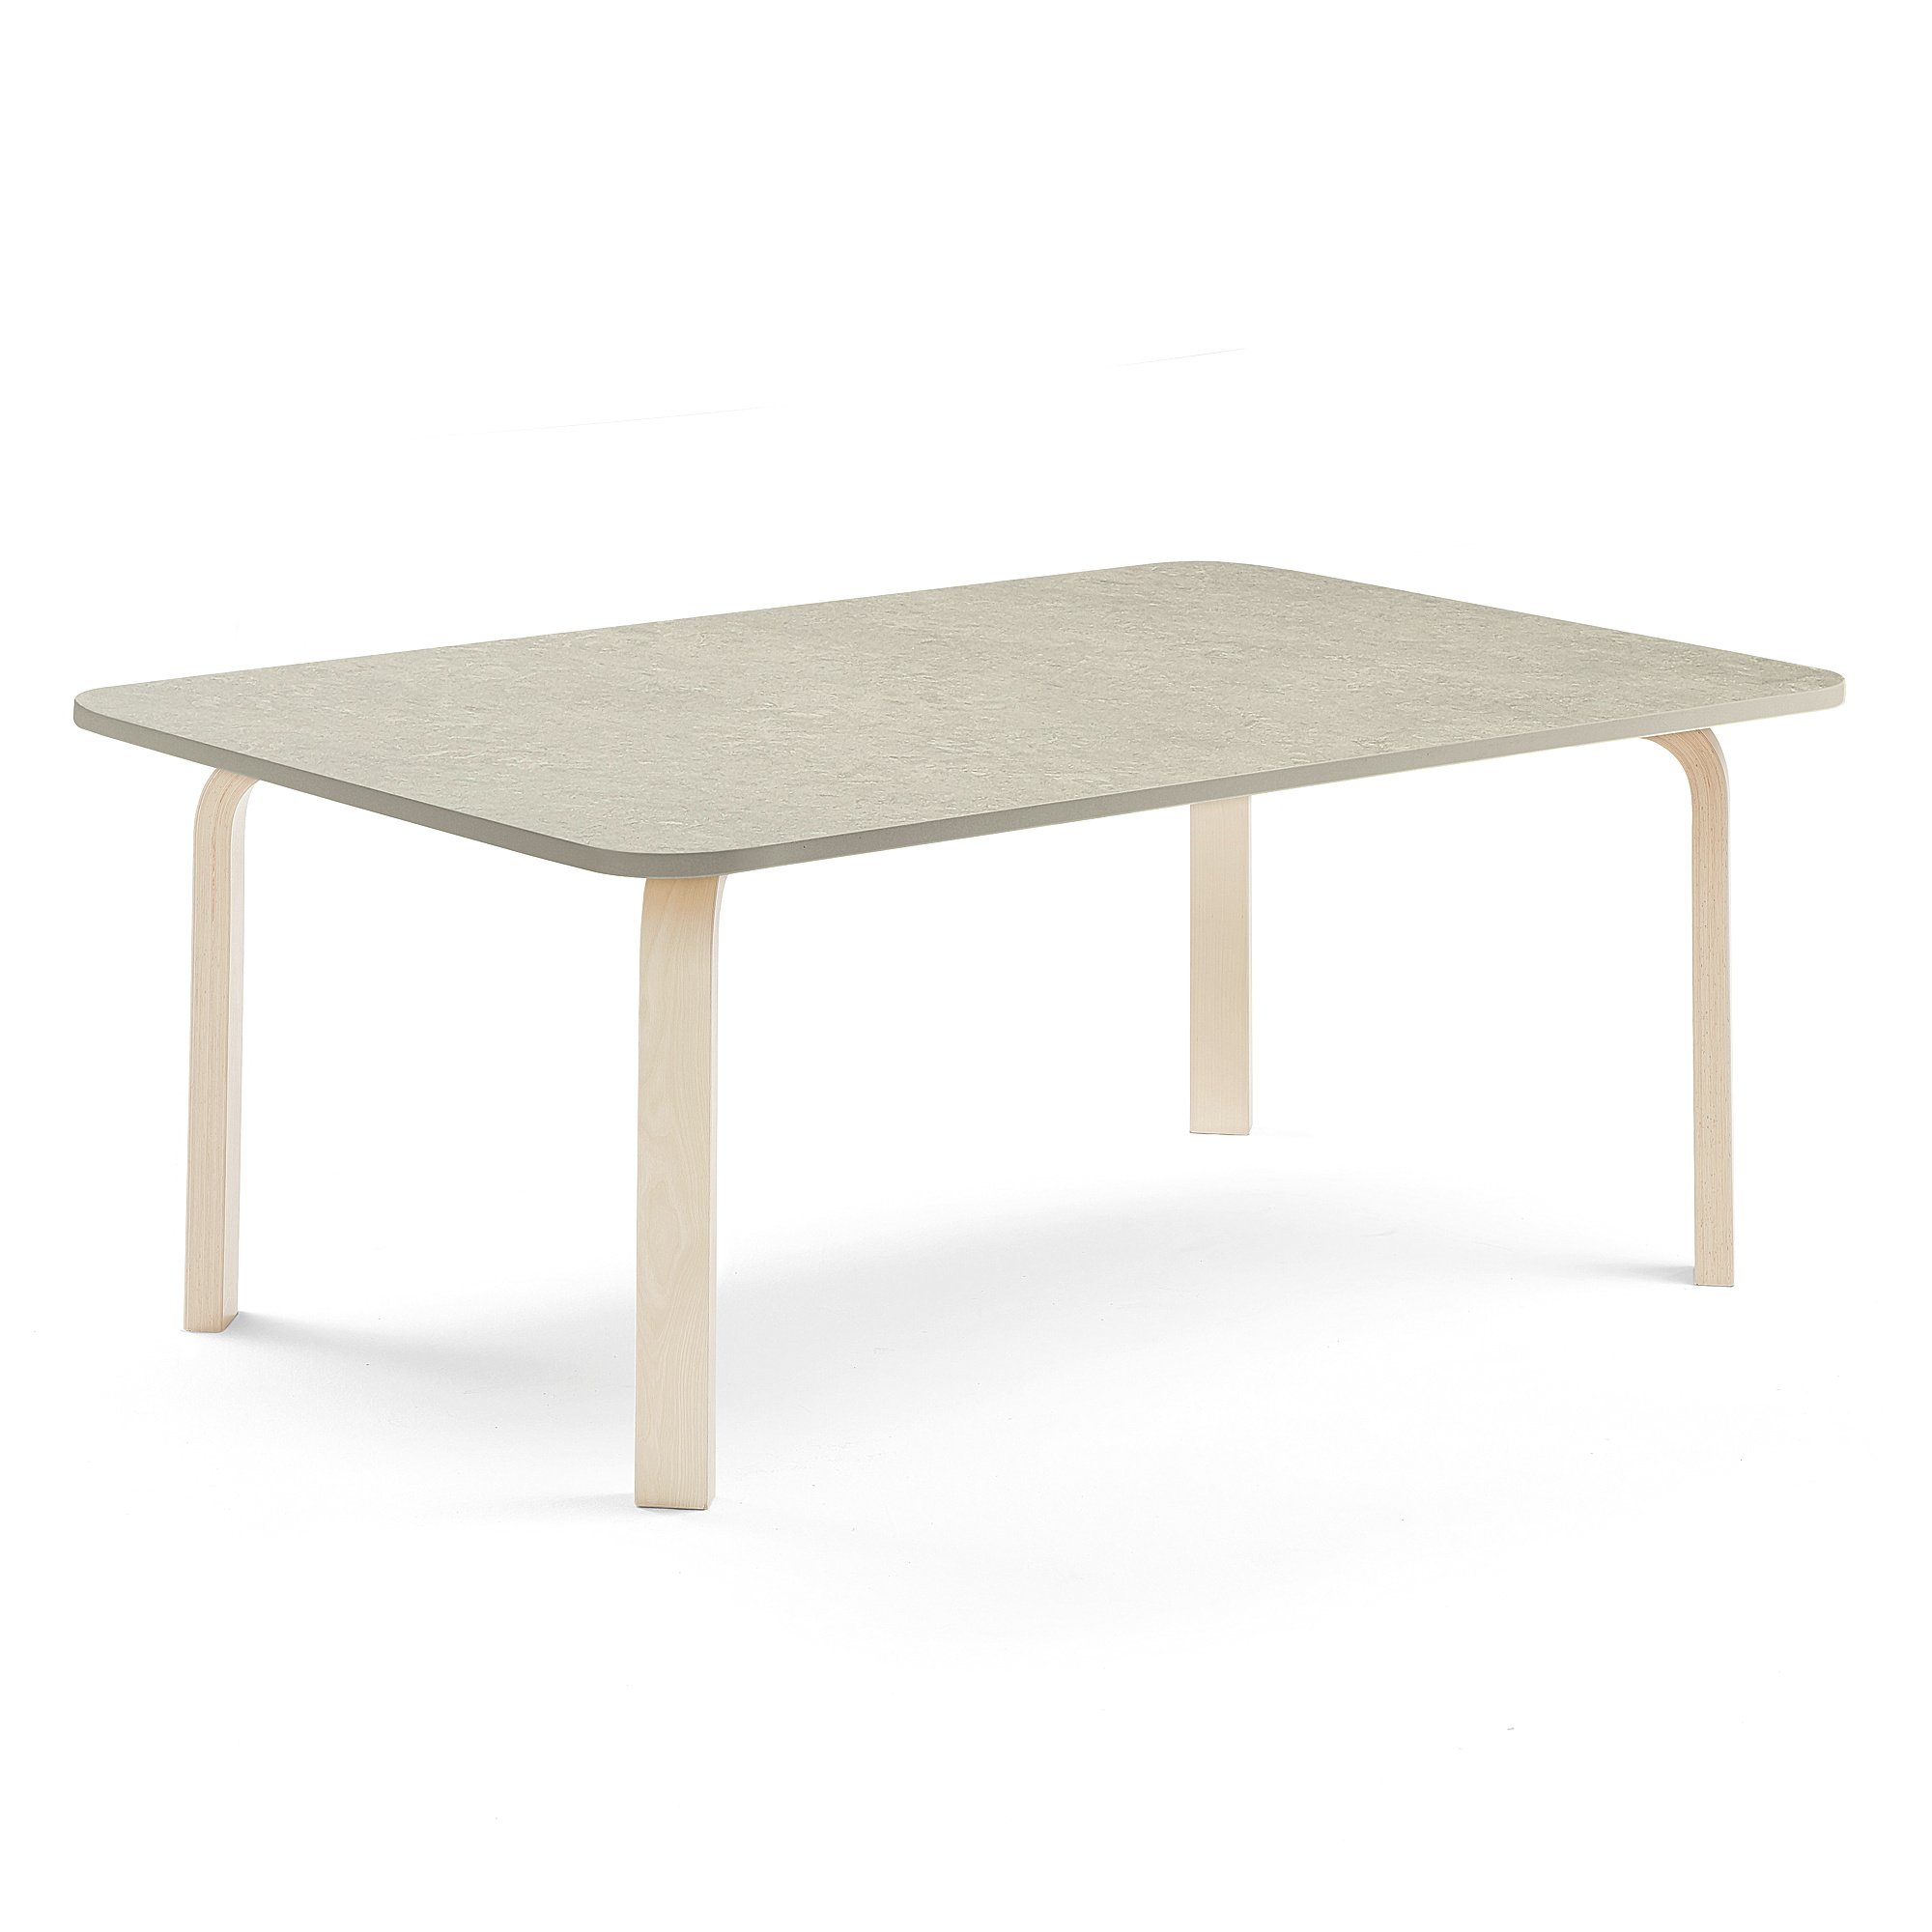 Stůl ELTON, 1800x700x530 mm, bříza, akustické linoleum, šedá